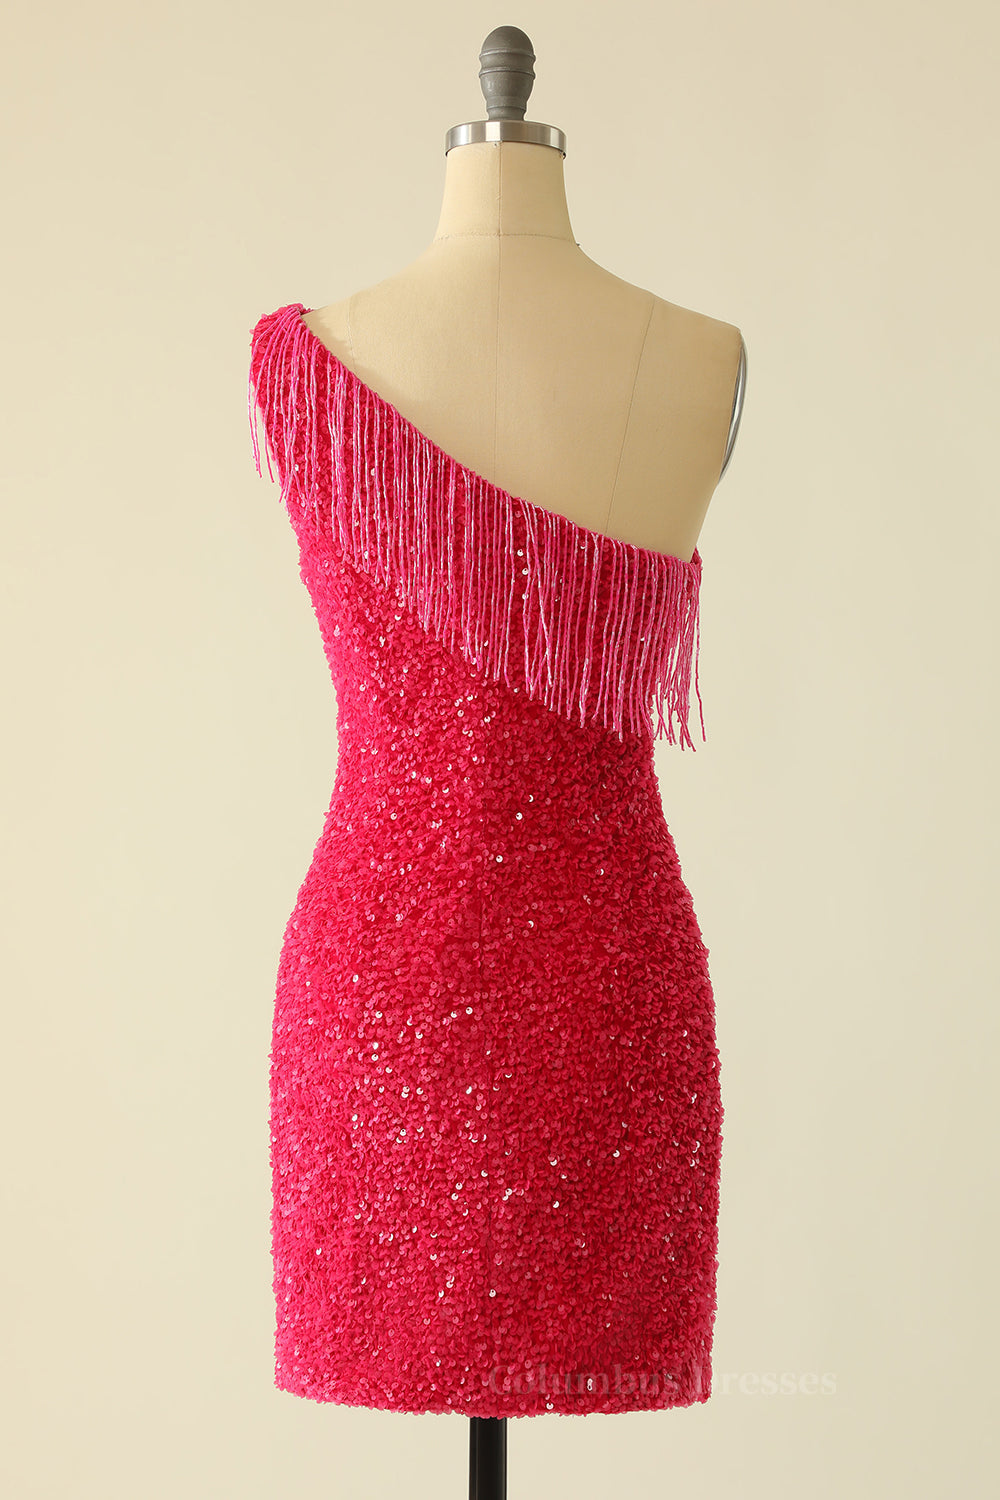 Prom Dresses Inspired, Tassels One Shoulder Hot Pink Sequin Mini Dress